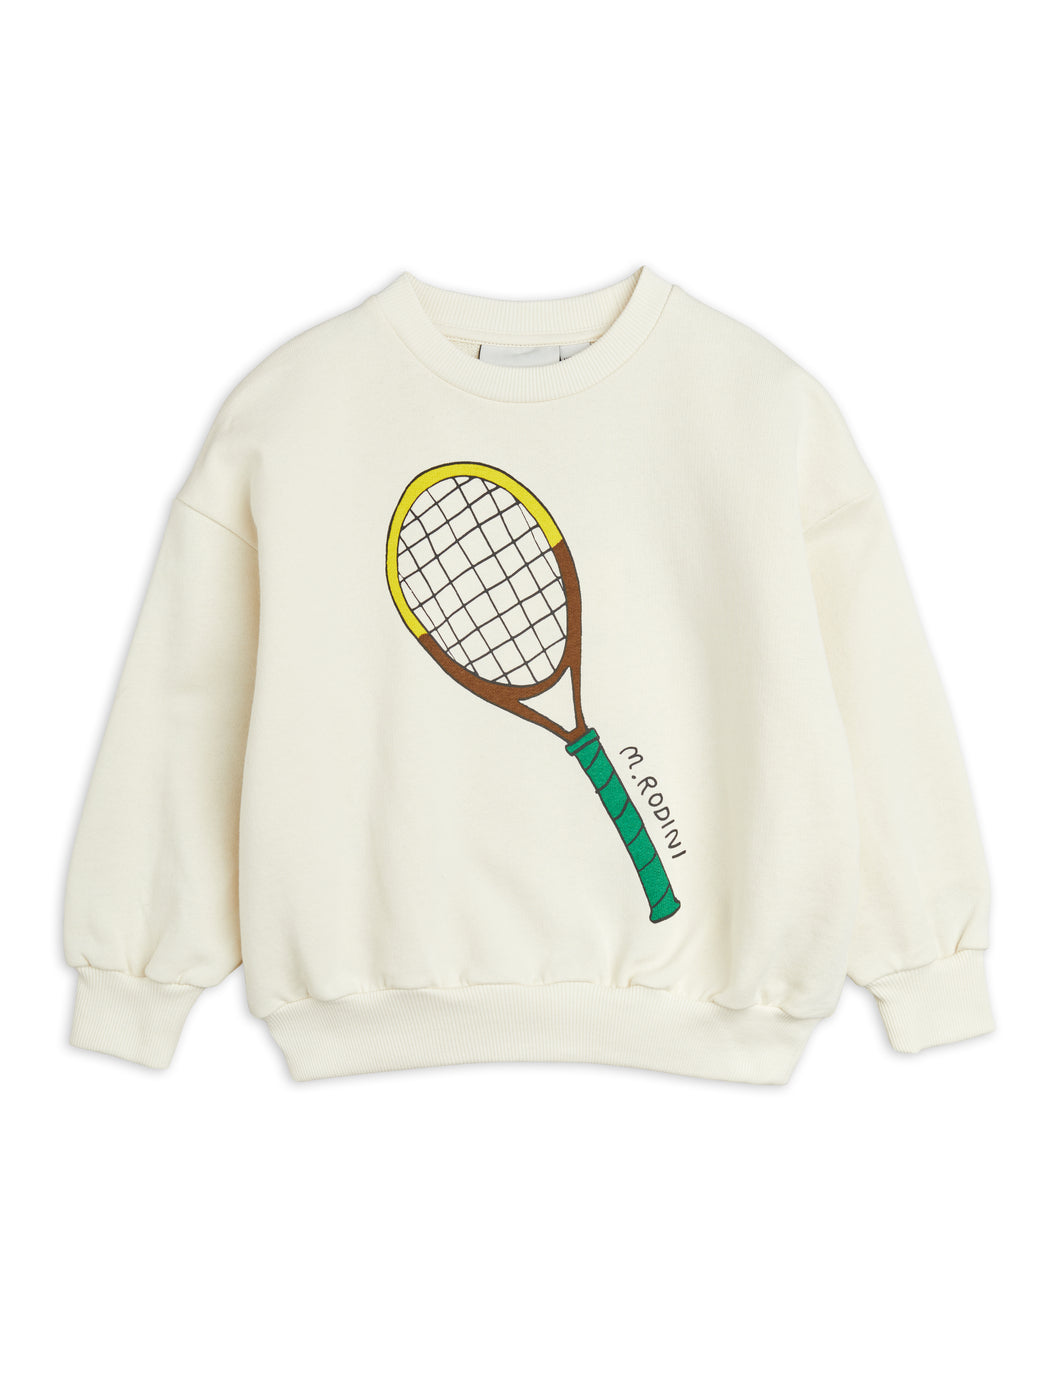 Mini Rodini / Sweatshirt / Tennis